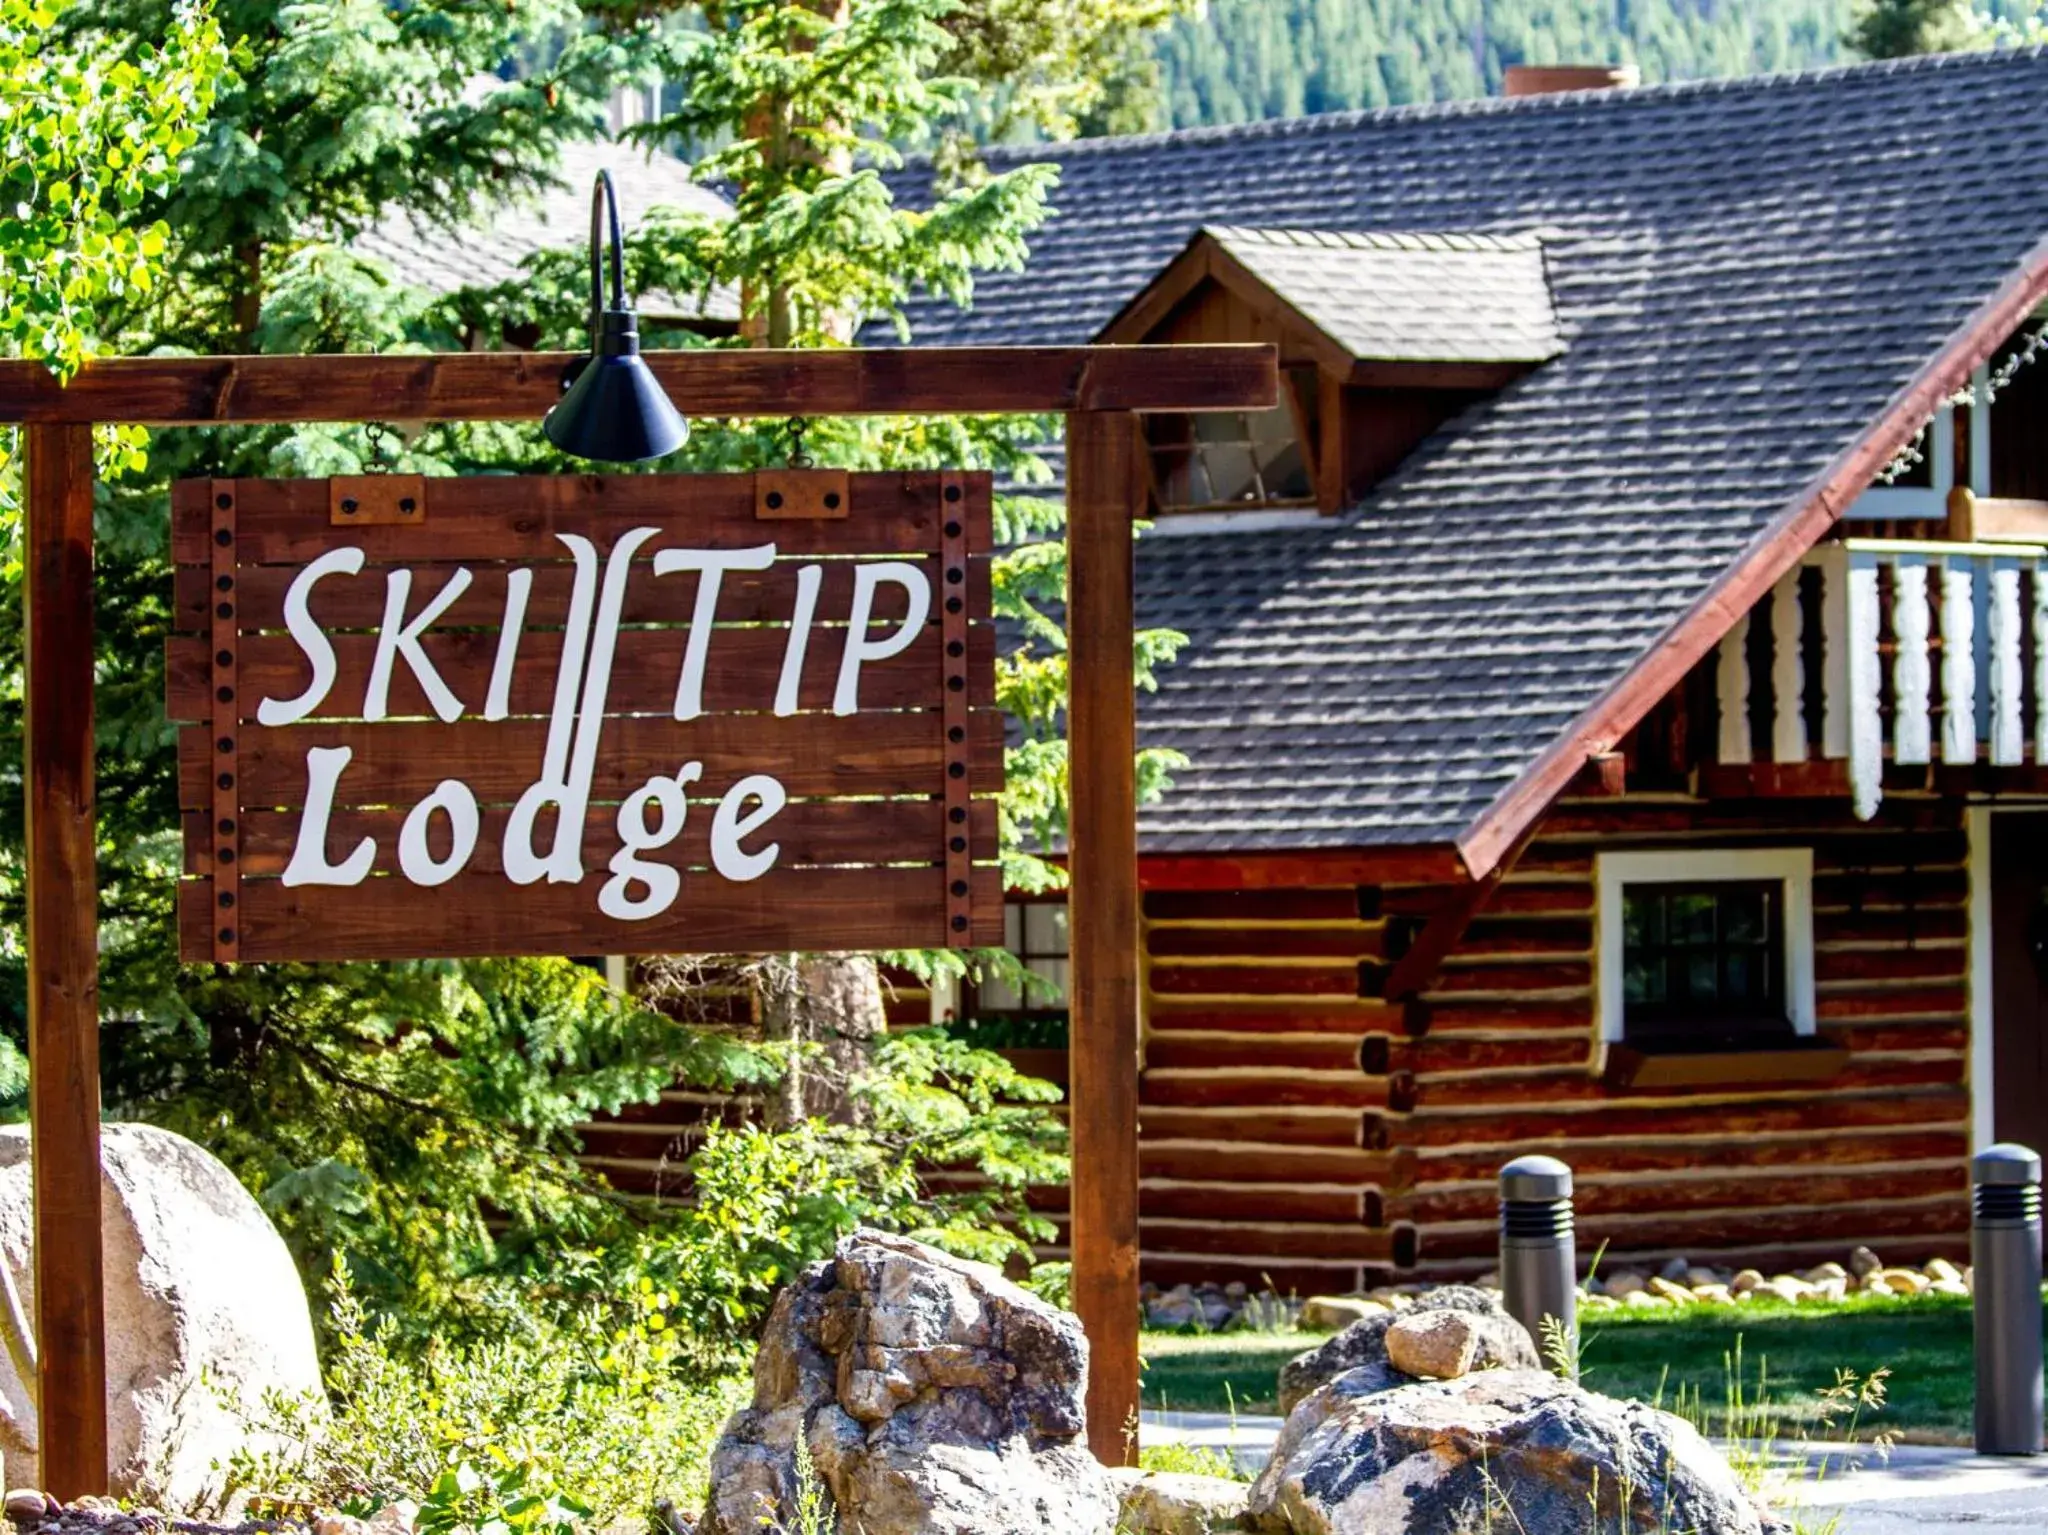 Facade/entrance in Ski Tip Lodge by Keystone Resort